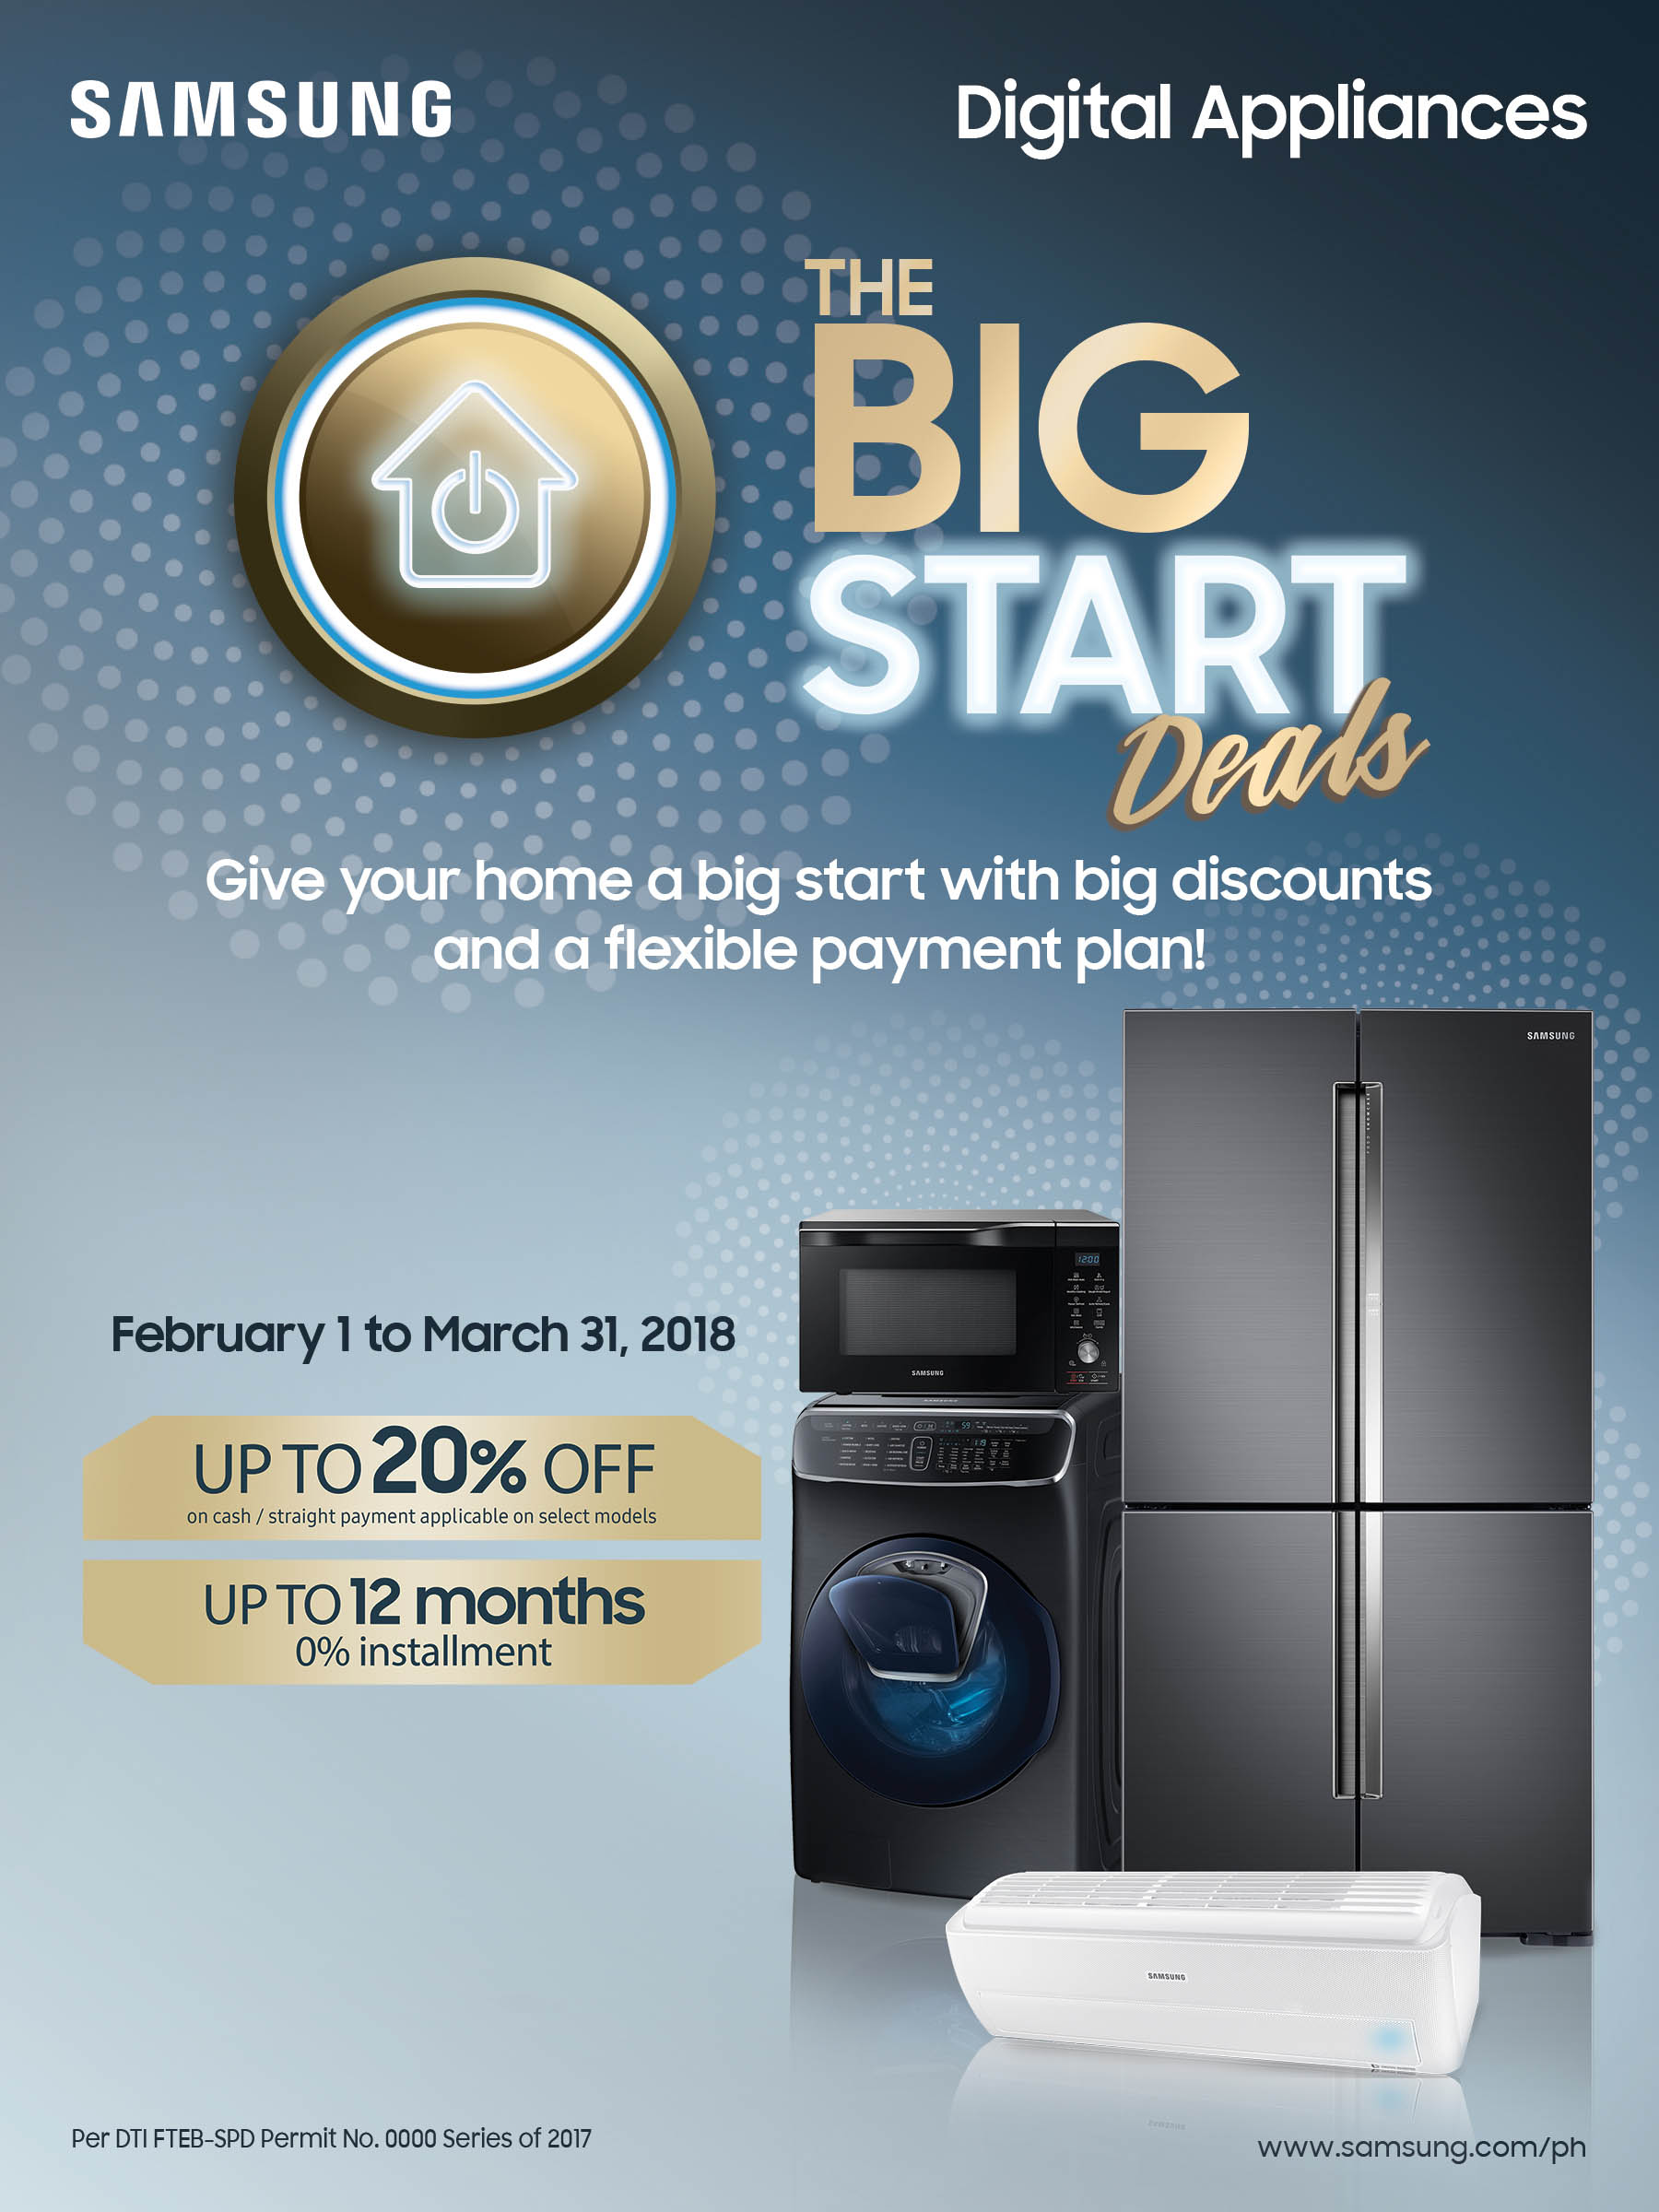 Great deals on premium Samsung Digital Appliances until March 31